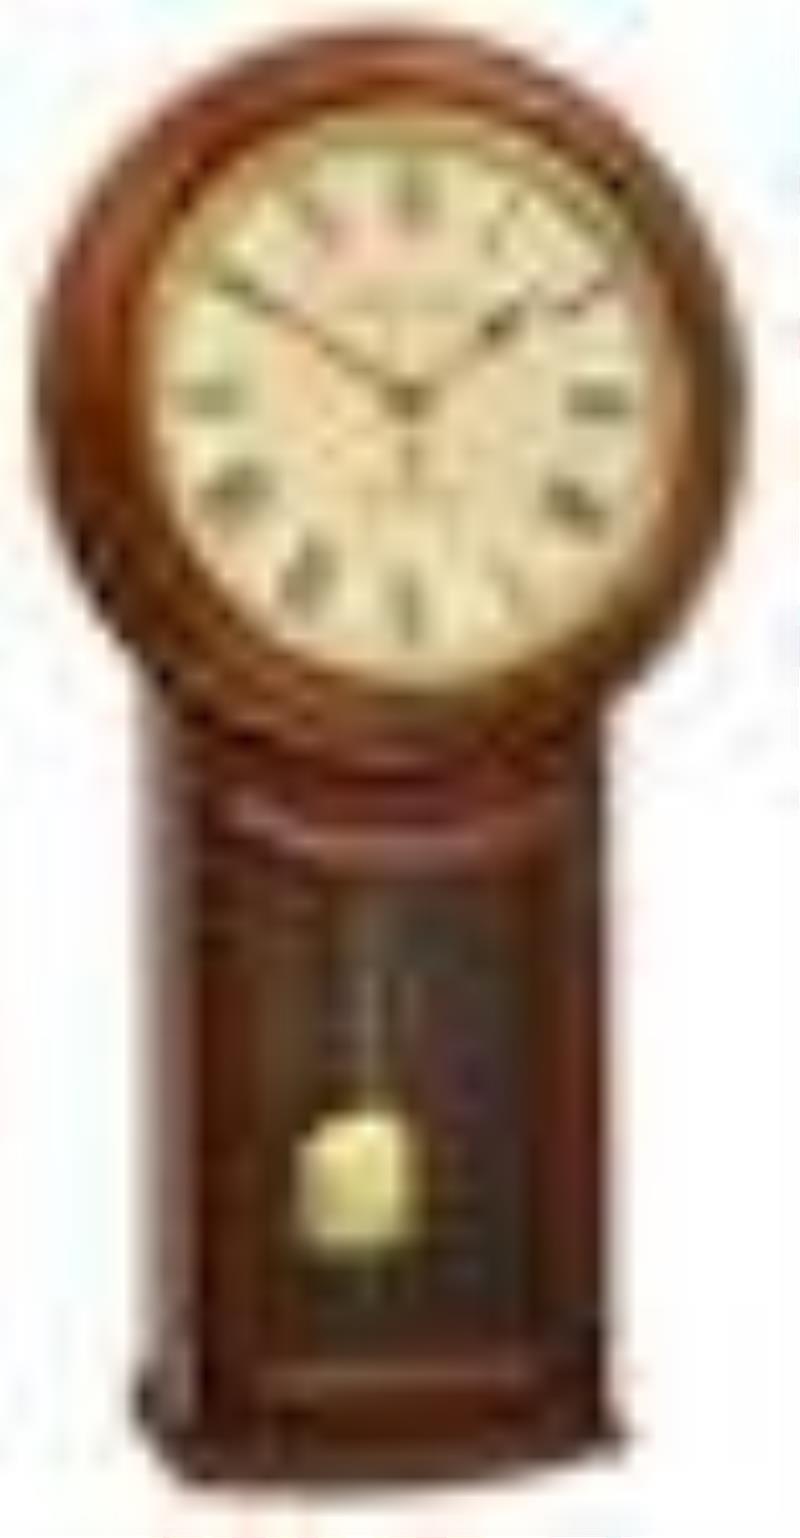 Scottish \\\”Rattray\\\” Single Fusee Tavern Clock